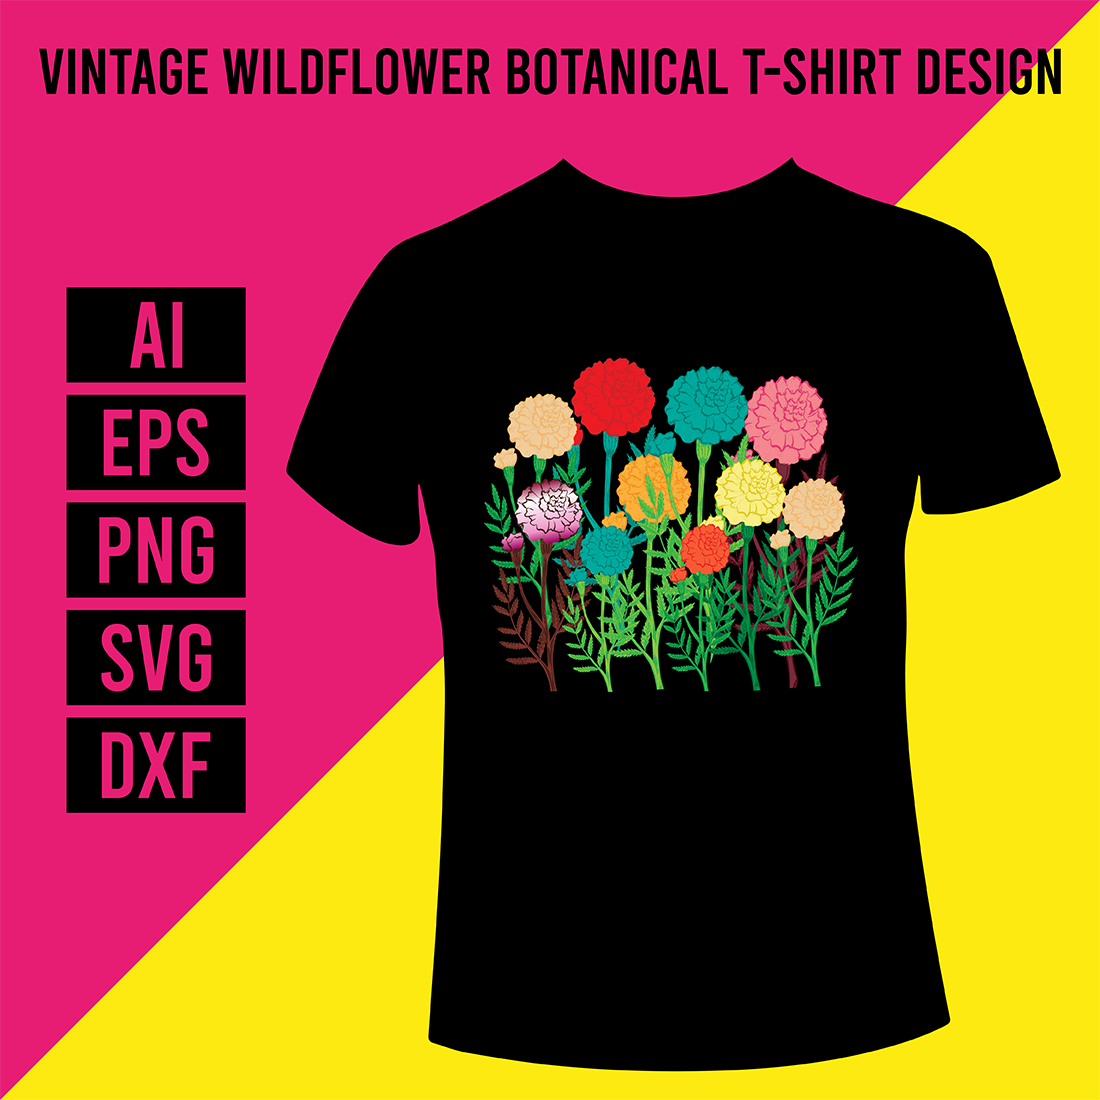 Vintage Wildflower Botanical T-Shirt Design cover image.